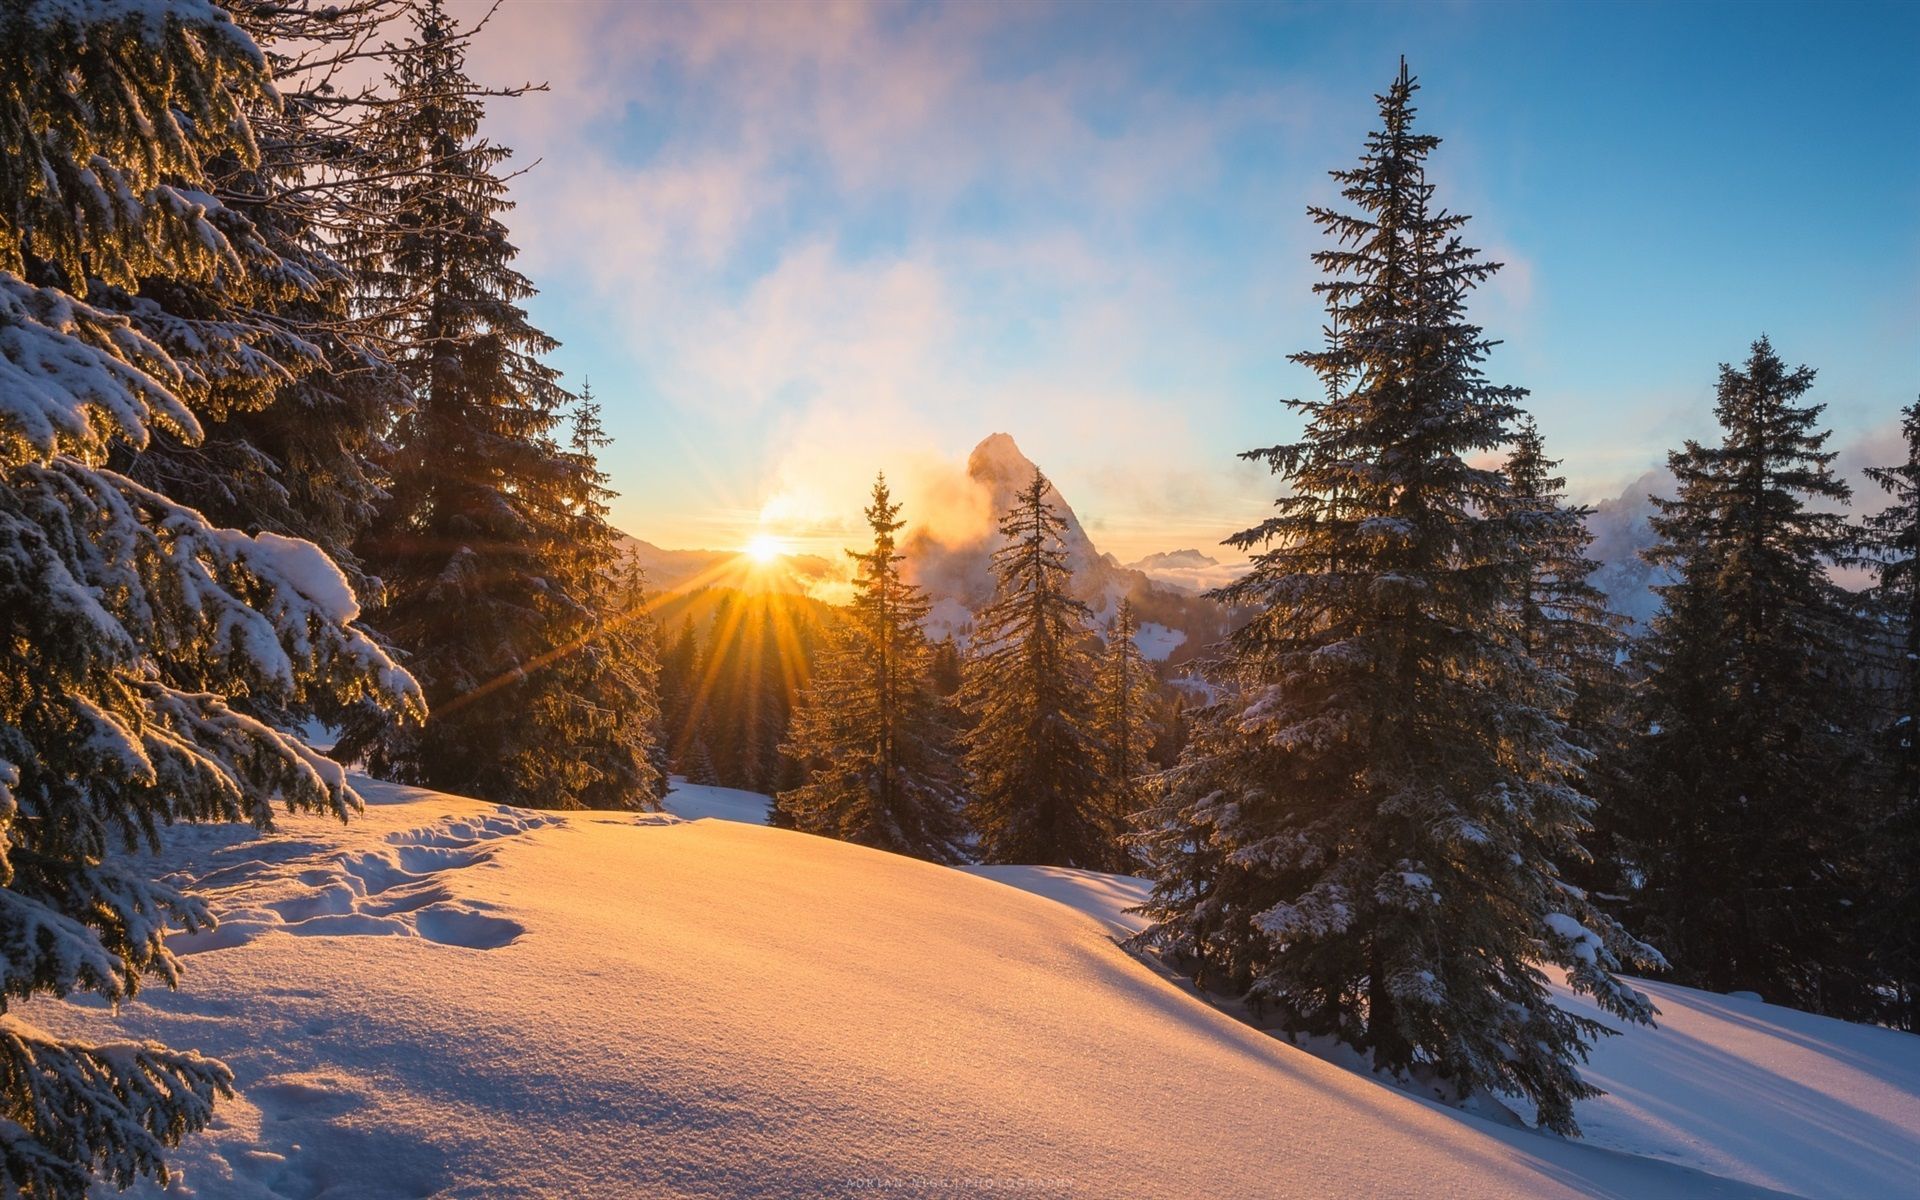  Alpen Hintergrundbild 1920x1200. Alpen, Winter, Schnee, Bäume, Sonnenstrahlen 1920x1200 HD Hintergrundbilder, HD, Bild